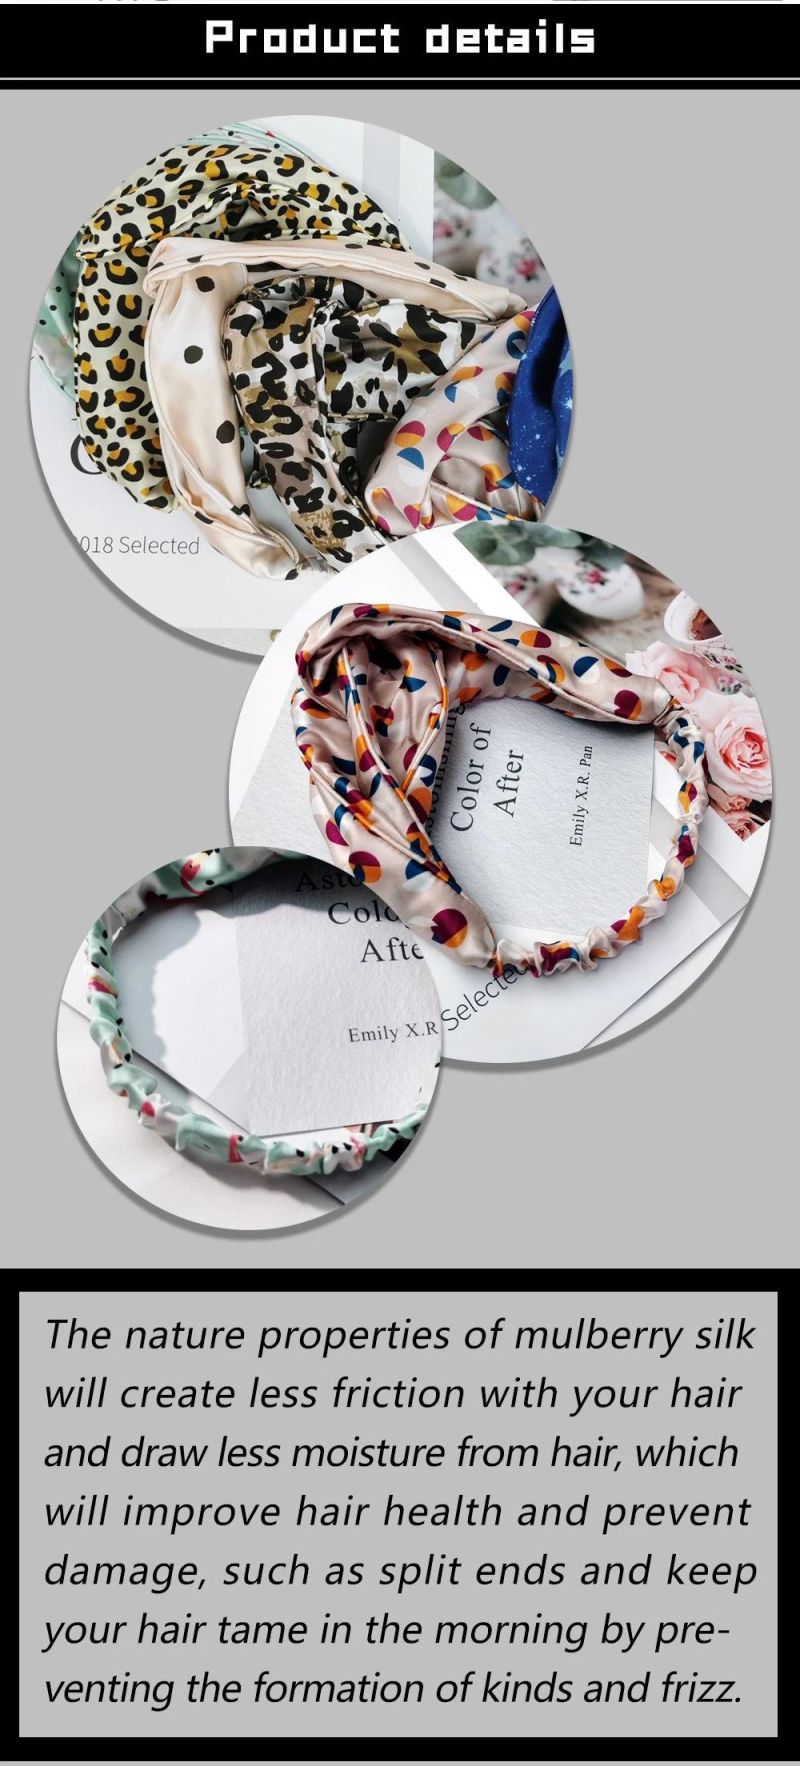 High Quality Pure Silk Handband for Girls Accept Customer Design